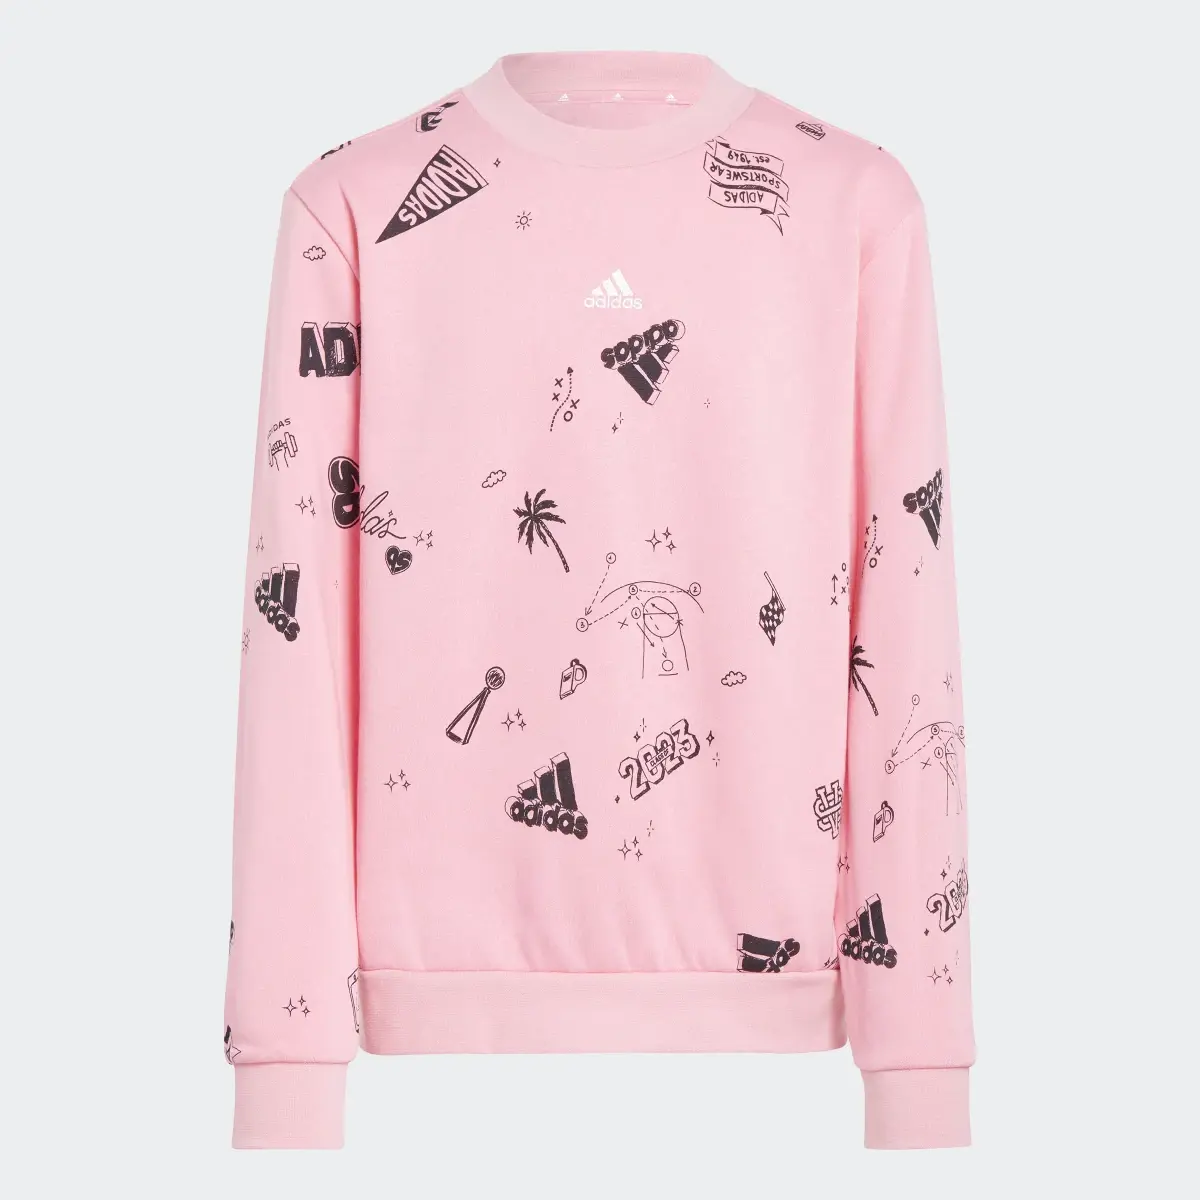 Adidas Brand Love Allover Print Kids Sweatshirt. 1